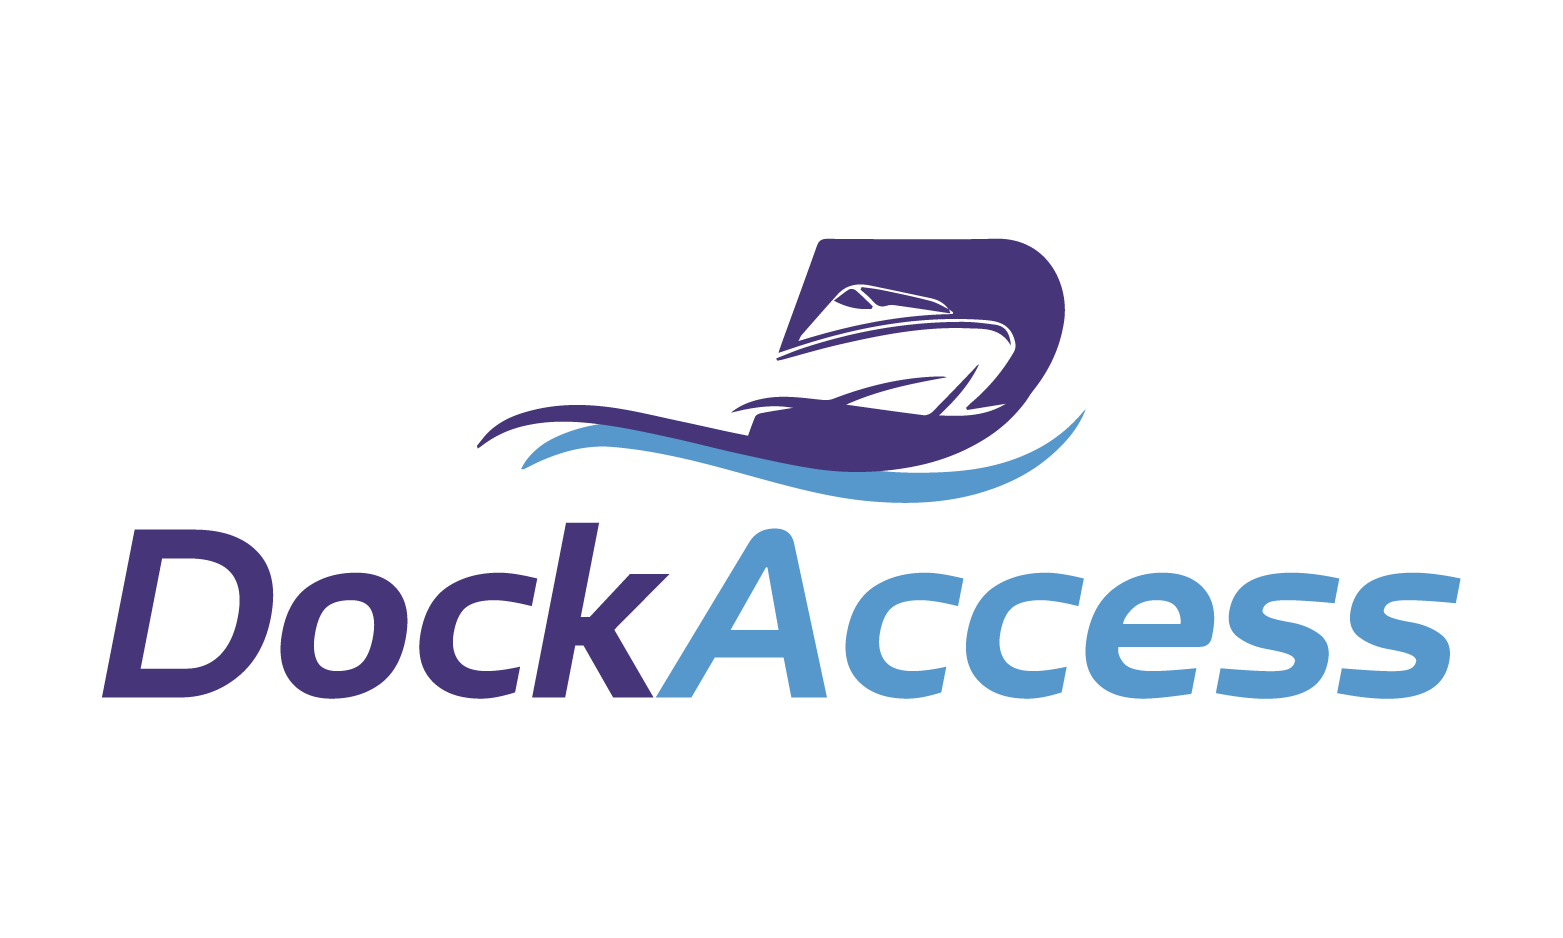 DockAccess.com - Creative brandable domain for sale